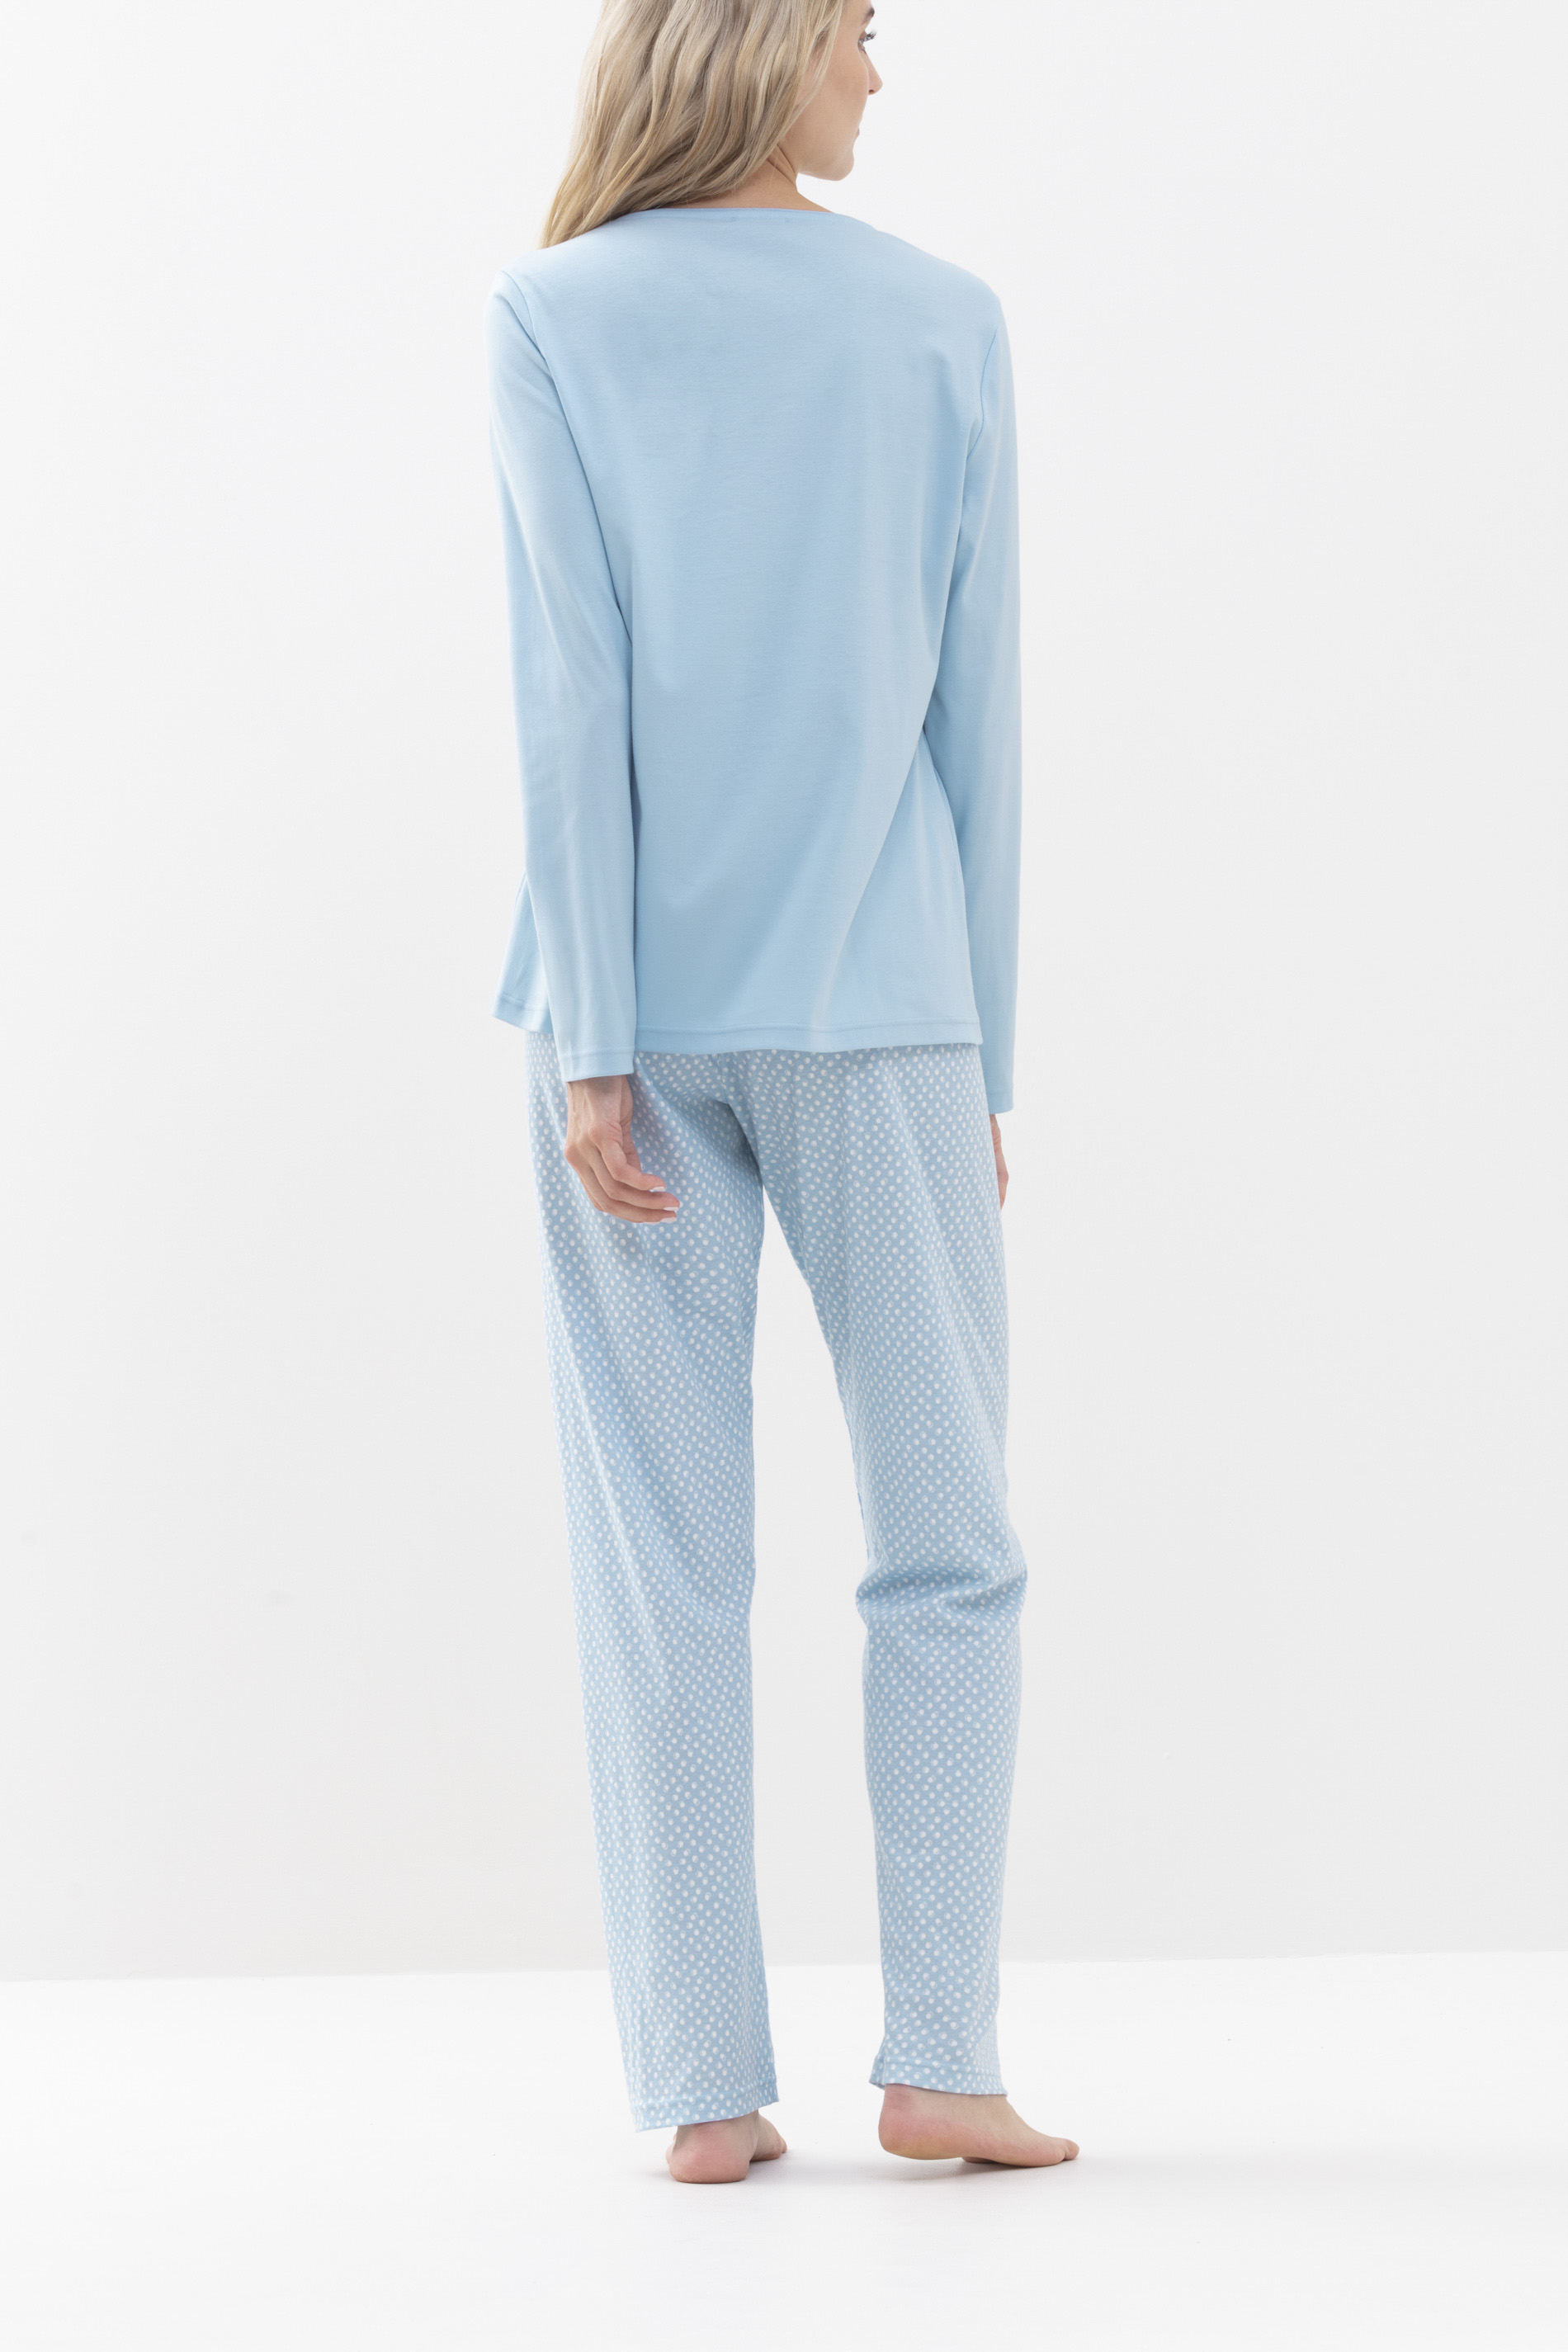 Pyjamas Dream Blue Serie Emelie Rear View | mey®